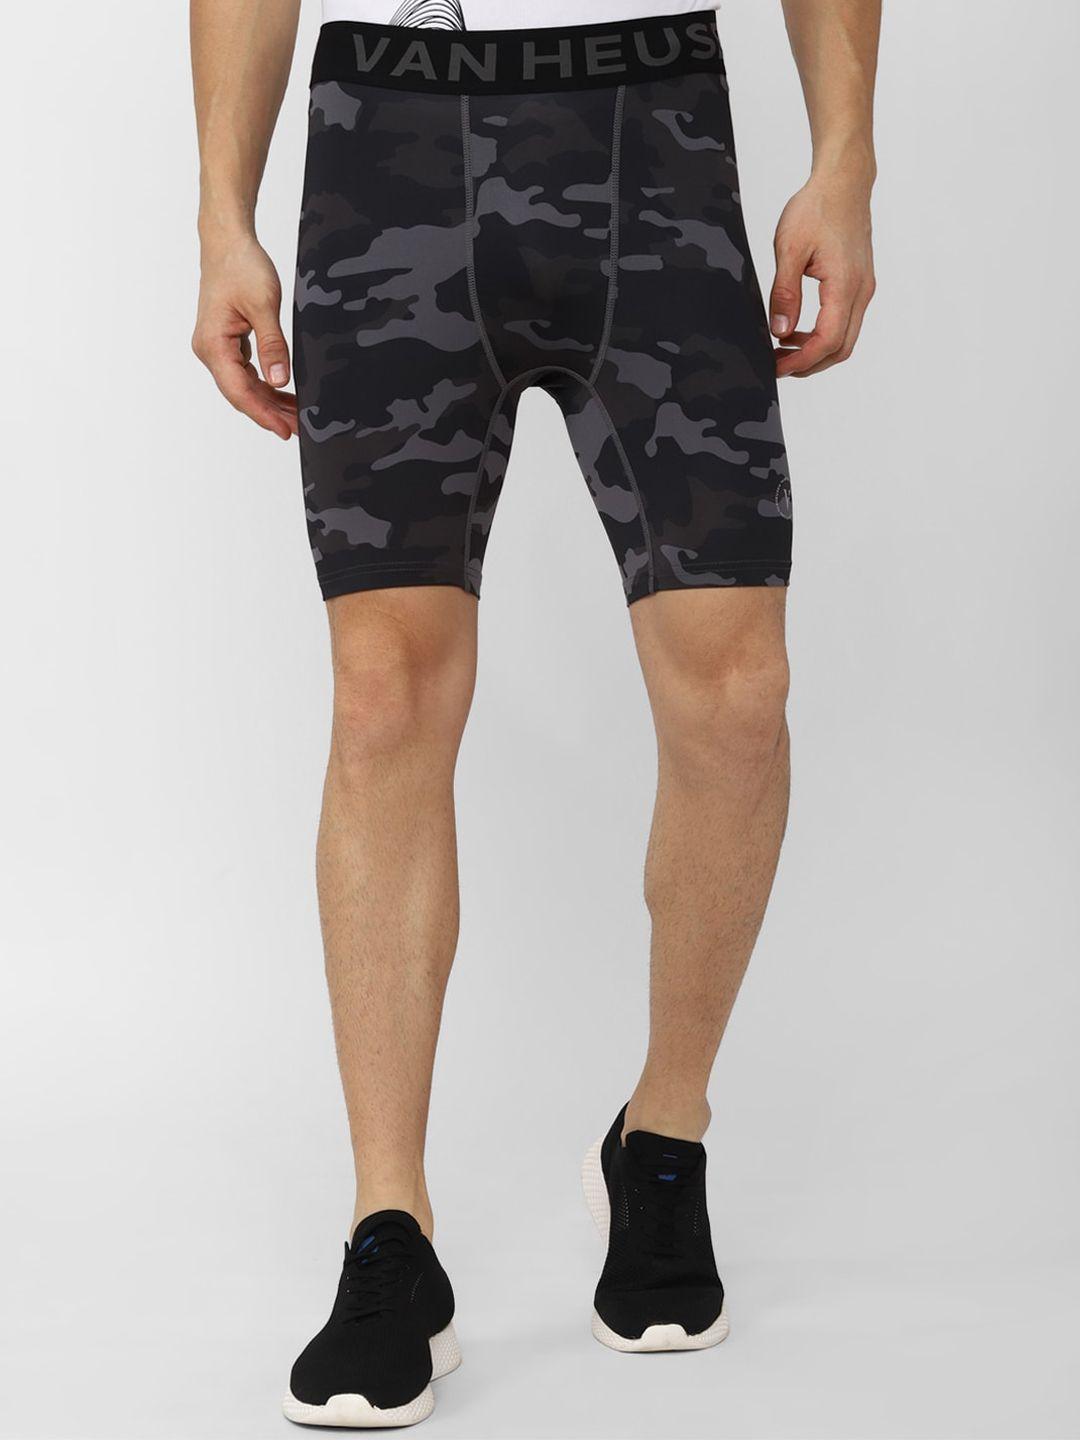 van-heusen-flex-men-grey-camouflage-printed-shorts